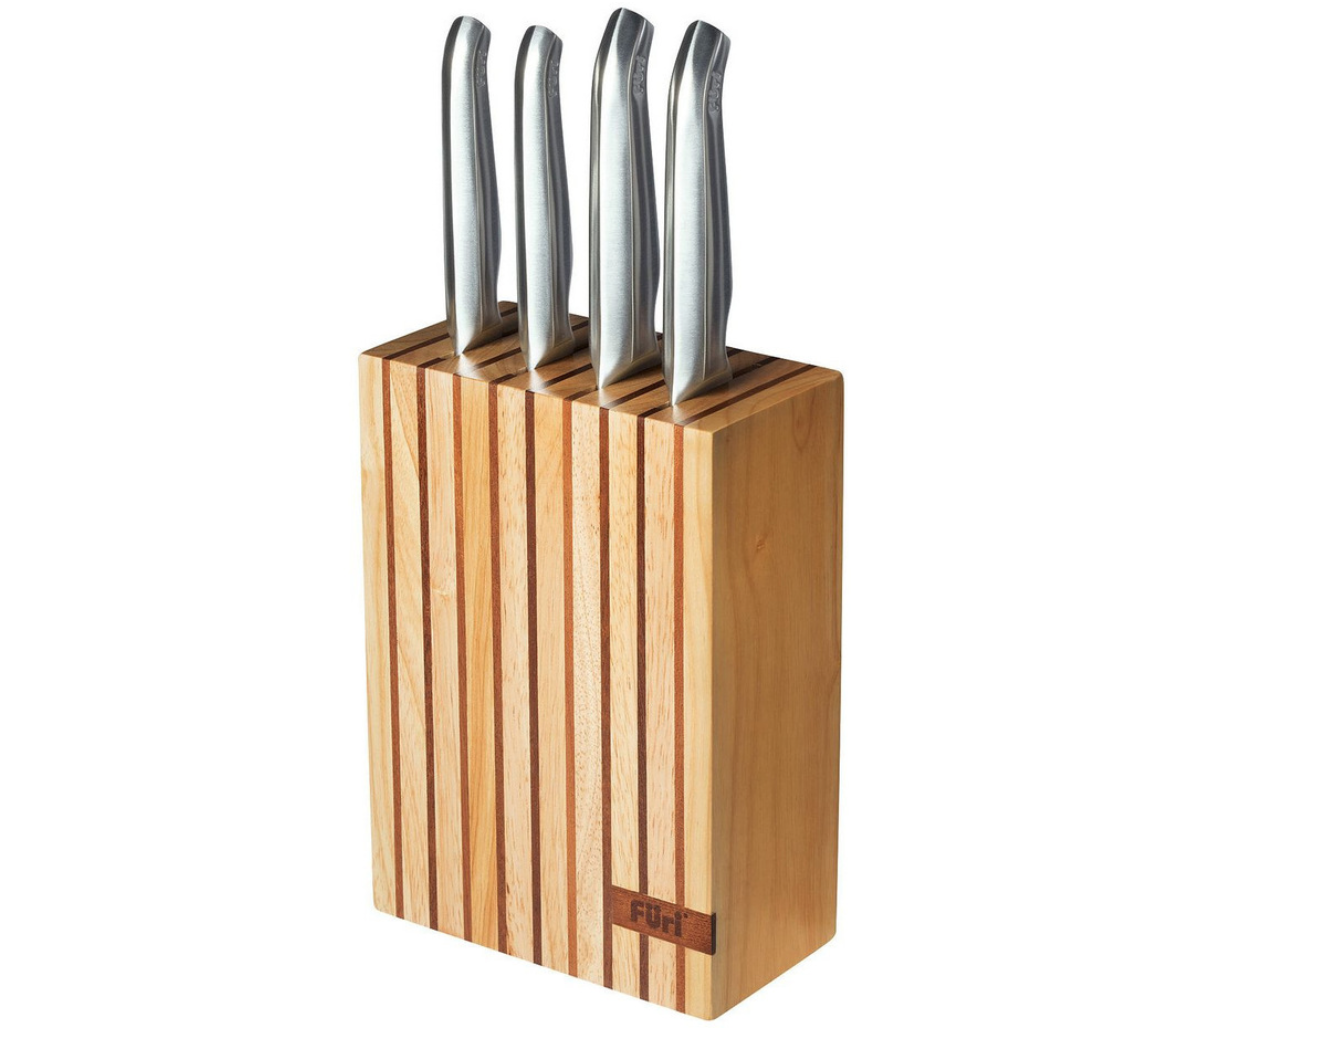 Furi pro wooden 5pc knife block set